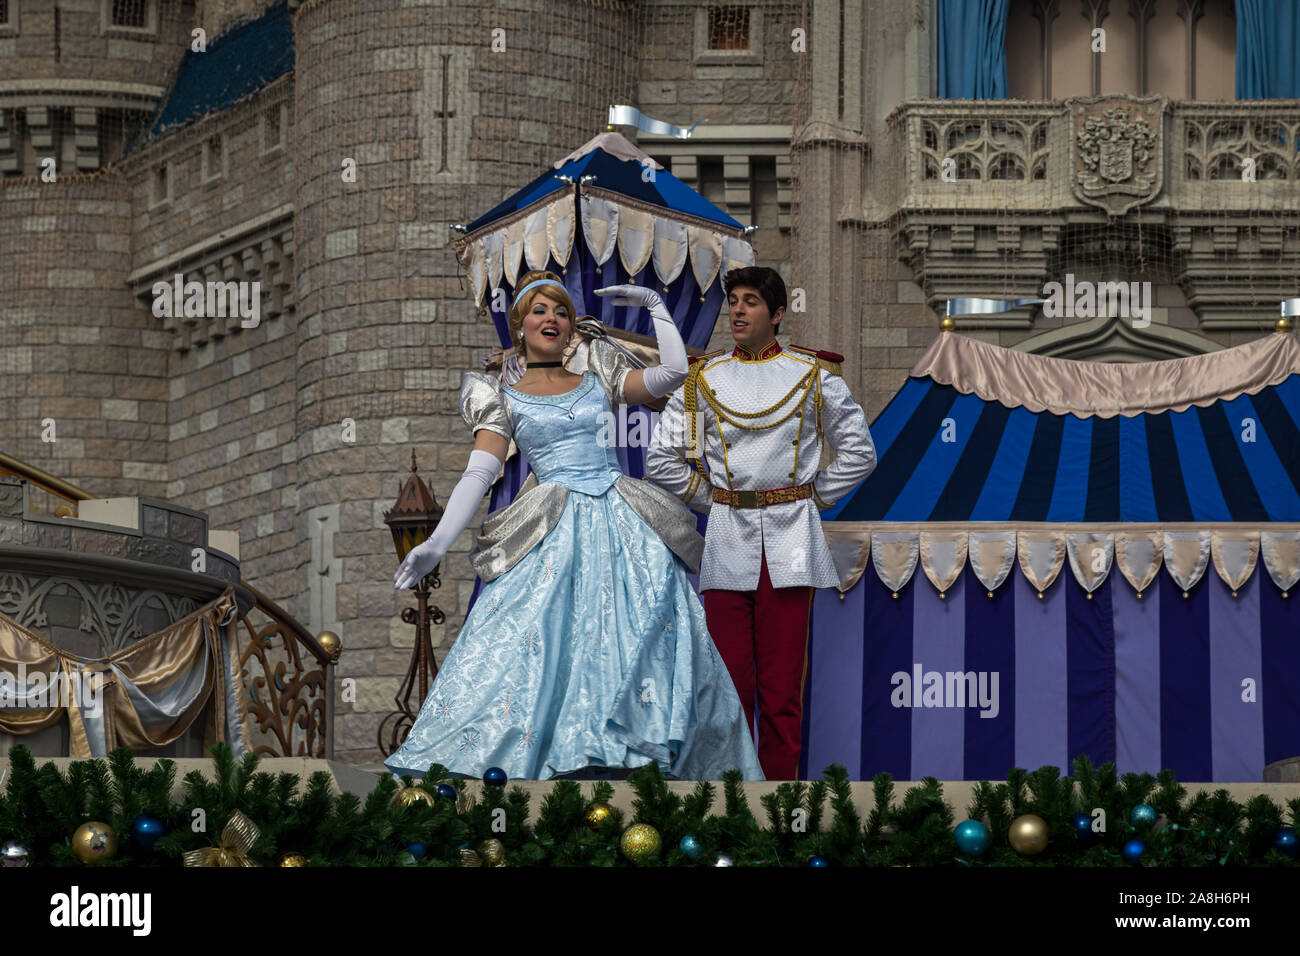 Cinderella and the prince dancing in the Dreams Come True performance in Magic Kingdom Orlando Florida, USA Stock Photo